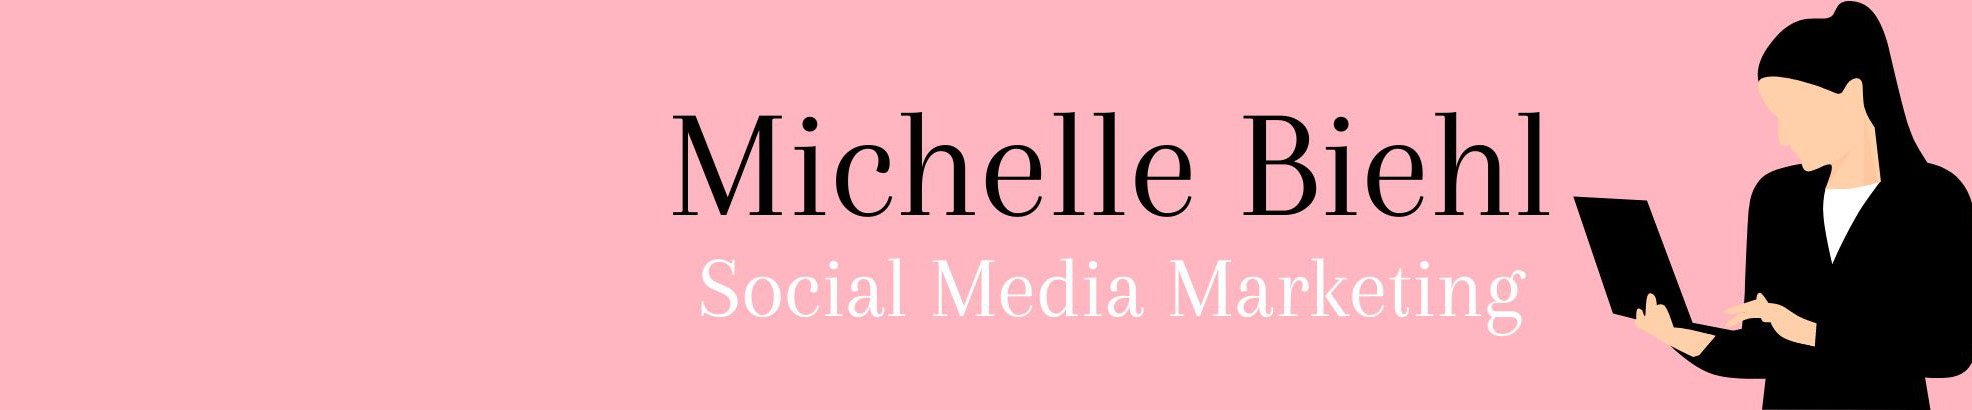 Biehl Michelle profil başlığı